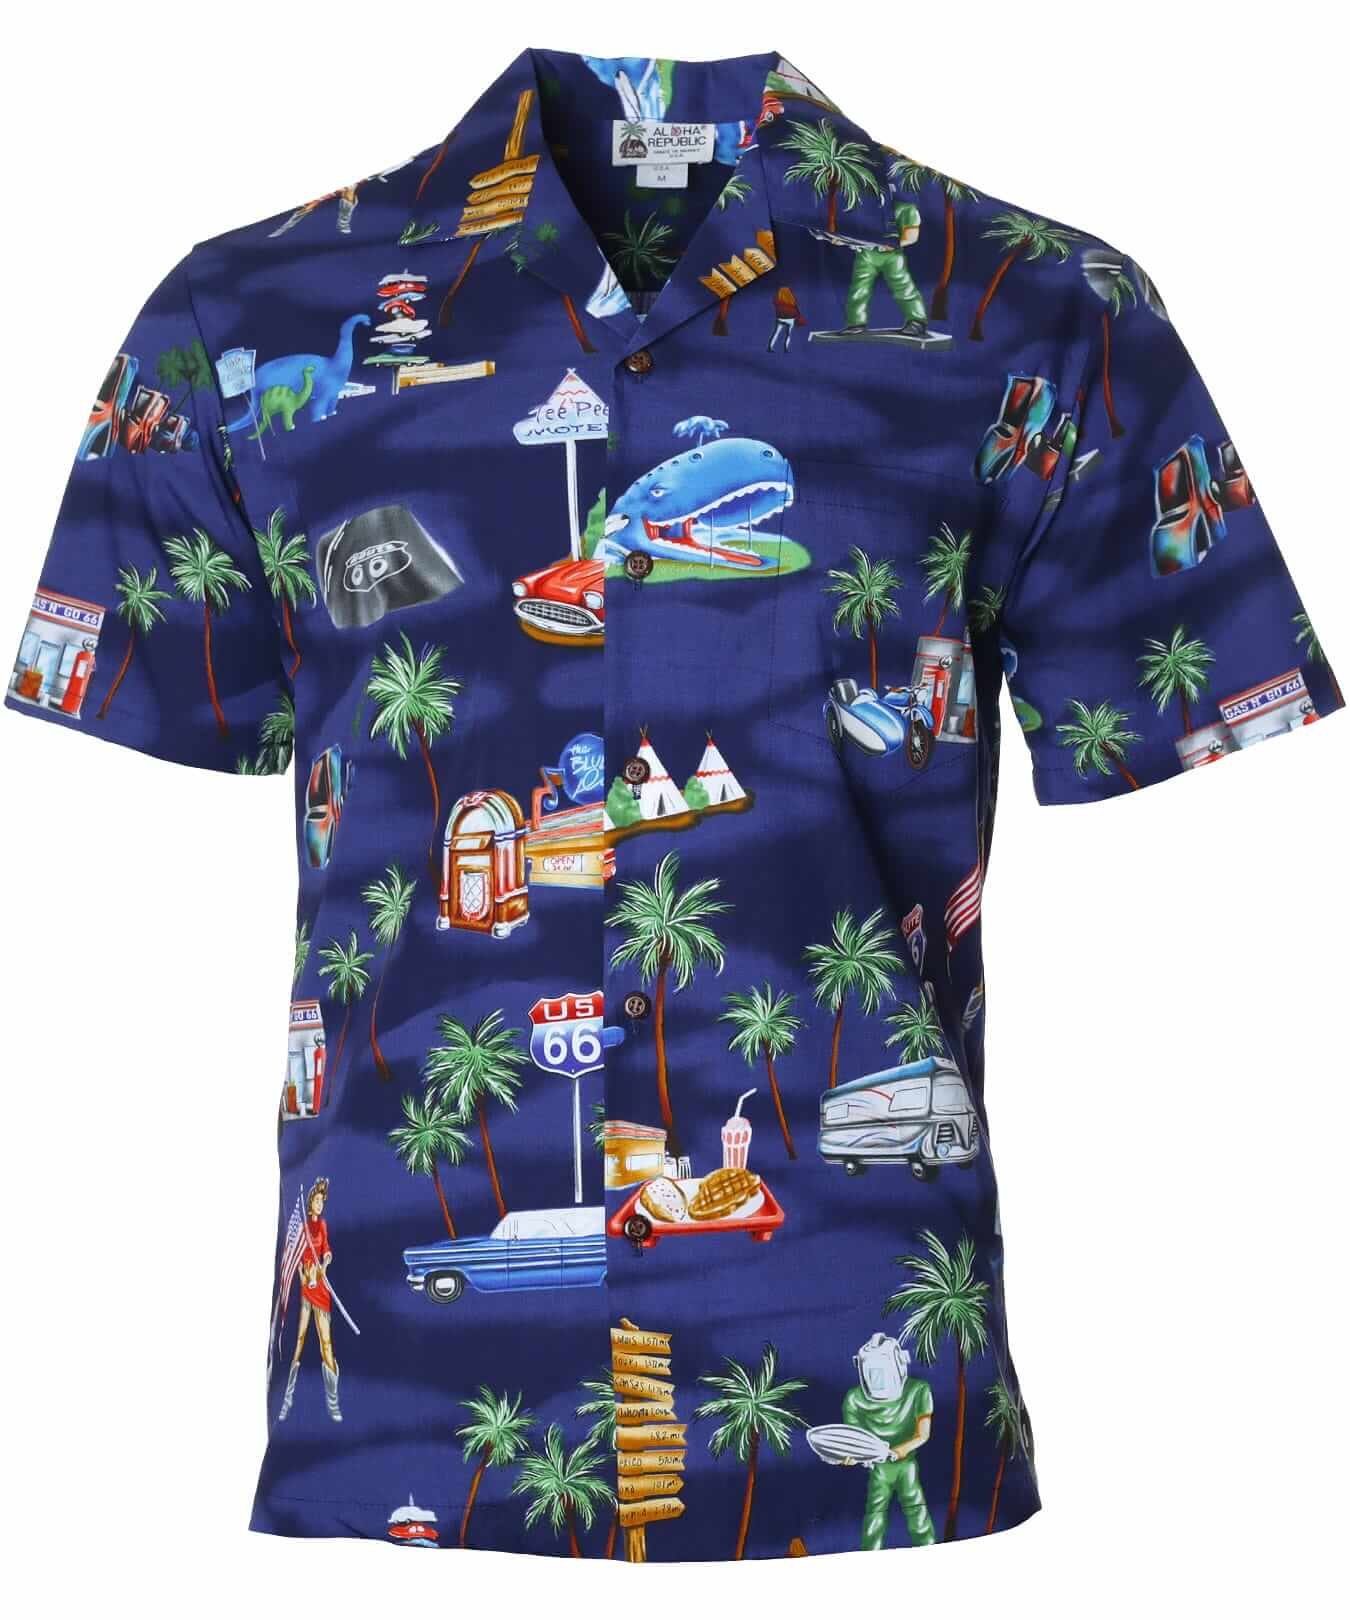 Rout 66 Cotton Aloha Shirt Navy